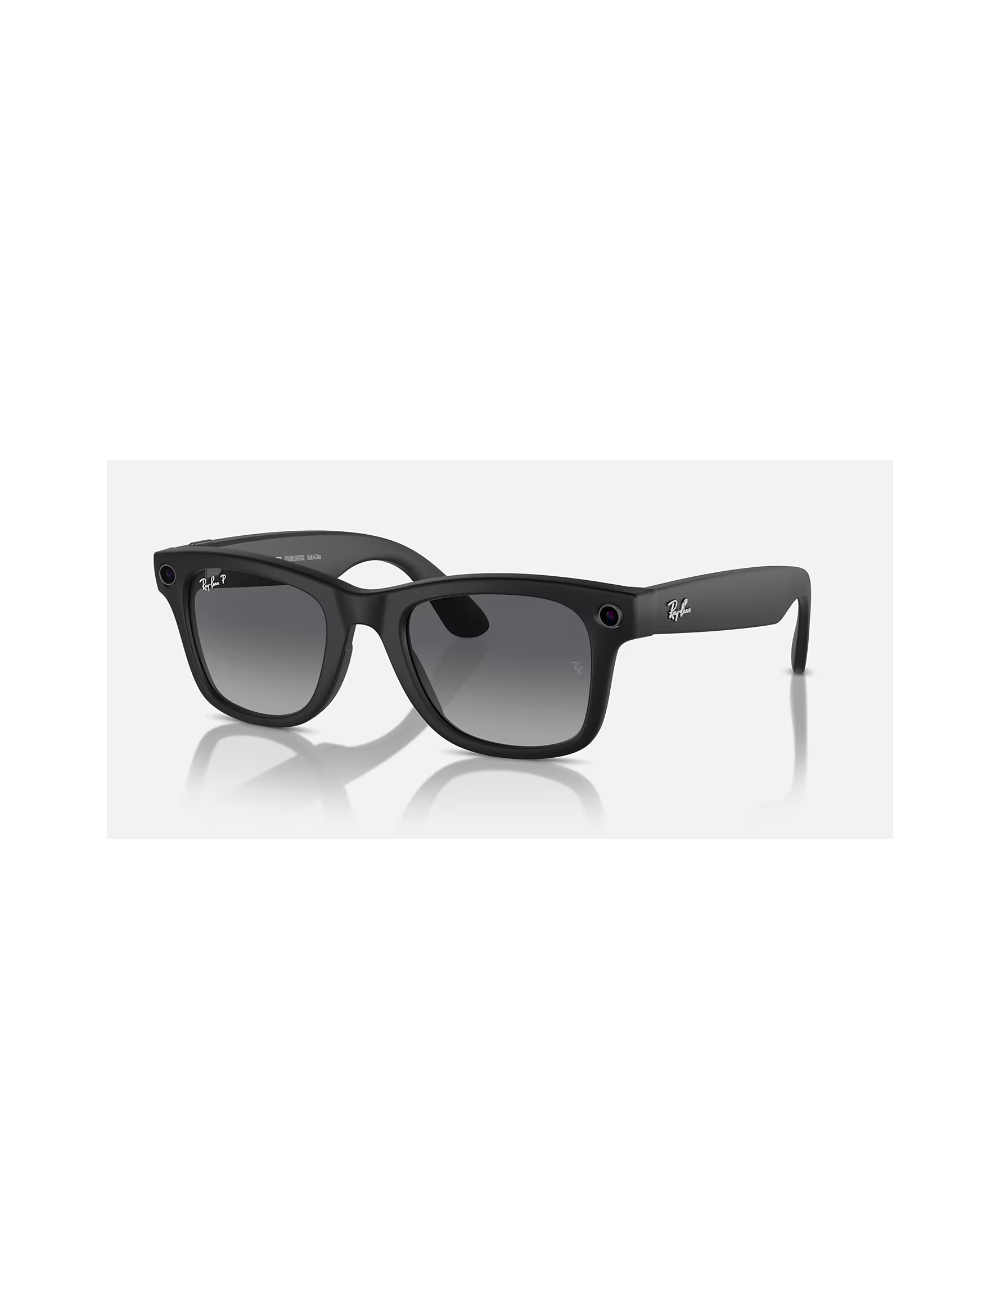 Sunglasses Ray-Ban RB 840 S 901/31 Mega Wayfarer Black Green - Walmart.com